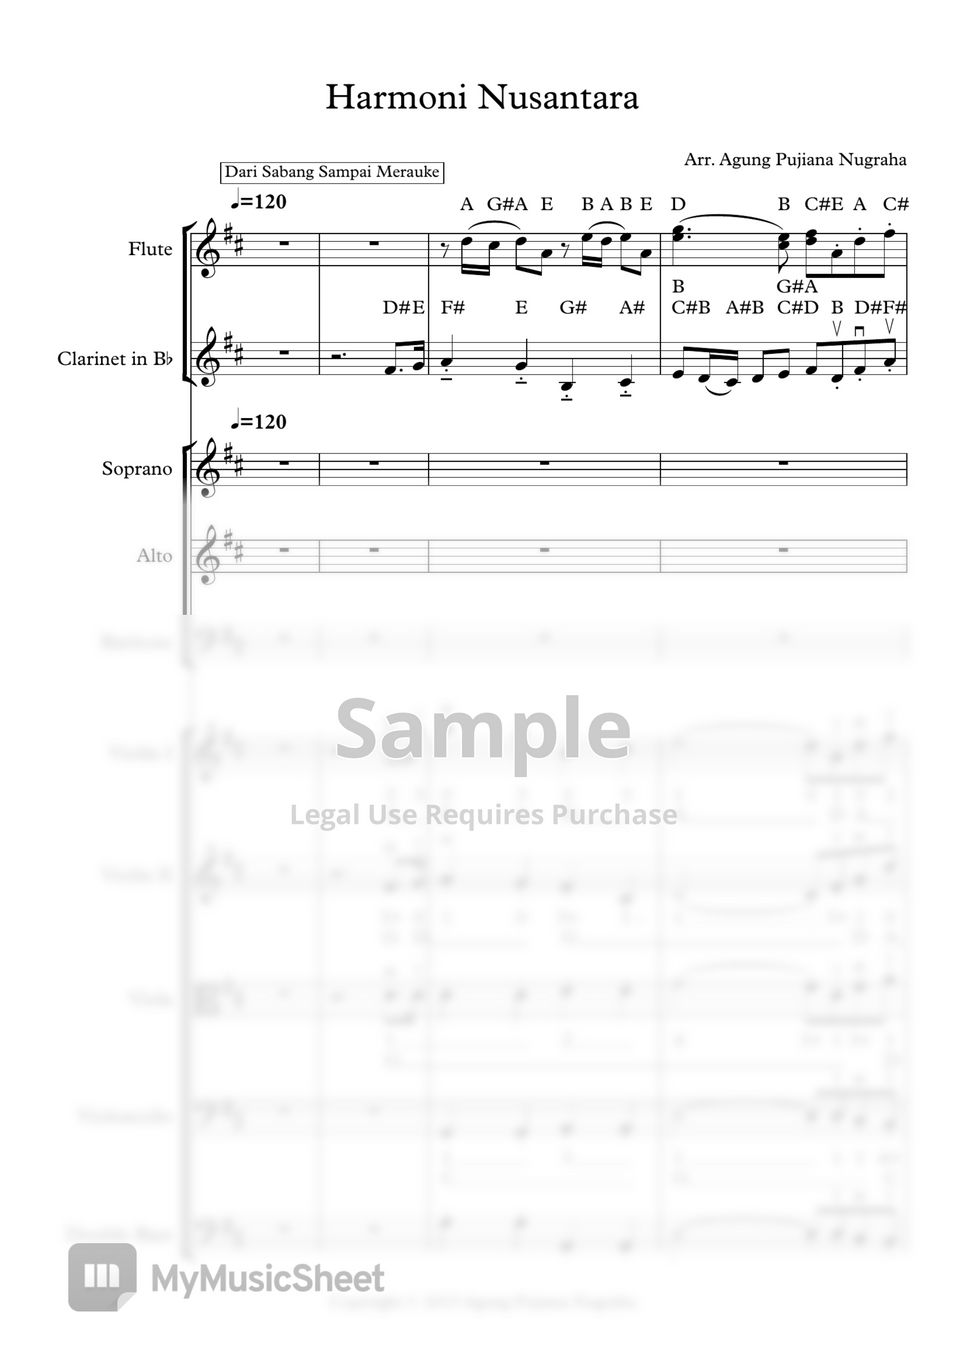 Indonesian Folk Song - Harmoni Nusantara (This is Medley arrangement of Indonesian Folk song for Choir and String+Wind Ensemble) by Agung Pujiana Nugraha